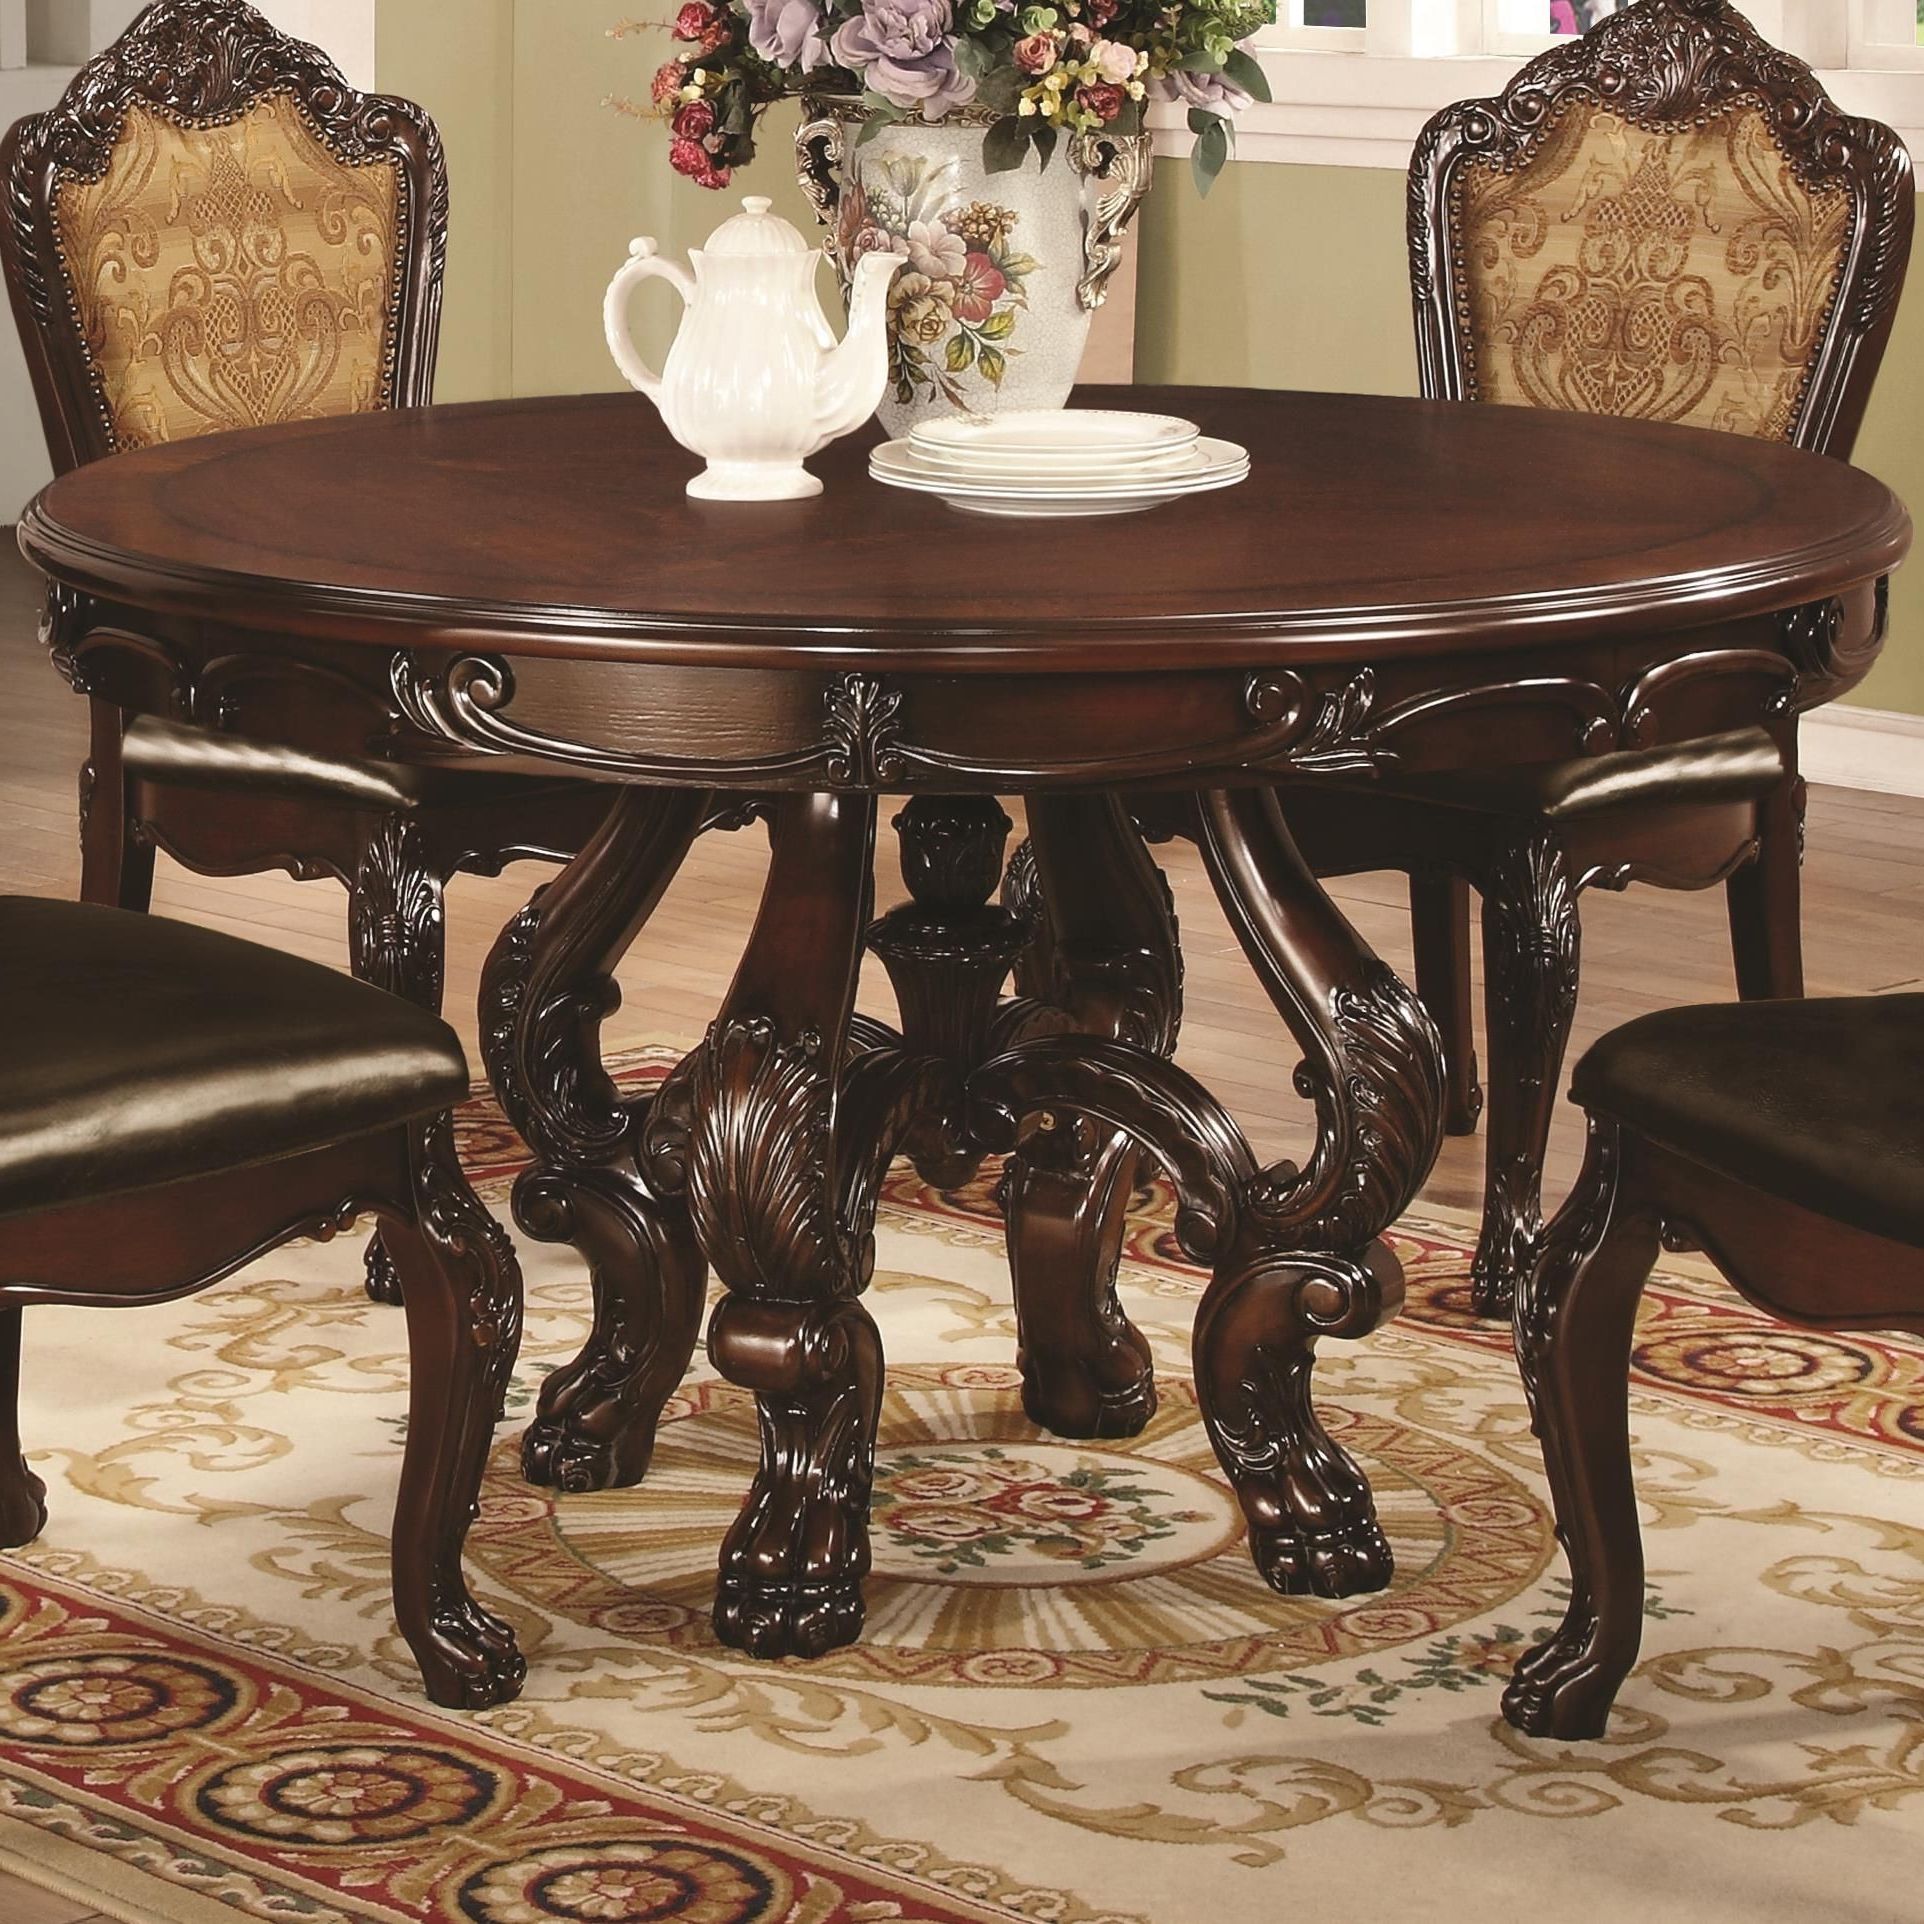 Preferred Abigail Cherry Round Pedestal Dining Table From Coaster Inside 47'' Pedestal Dining Tables (View 6 of 20)